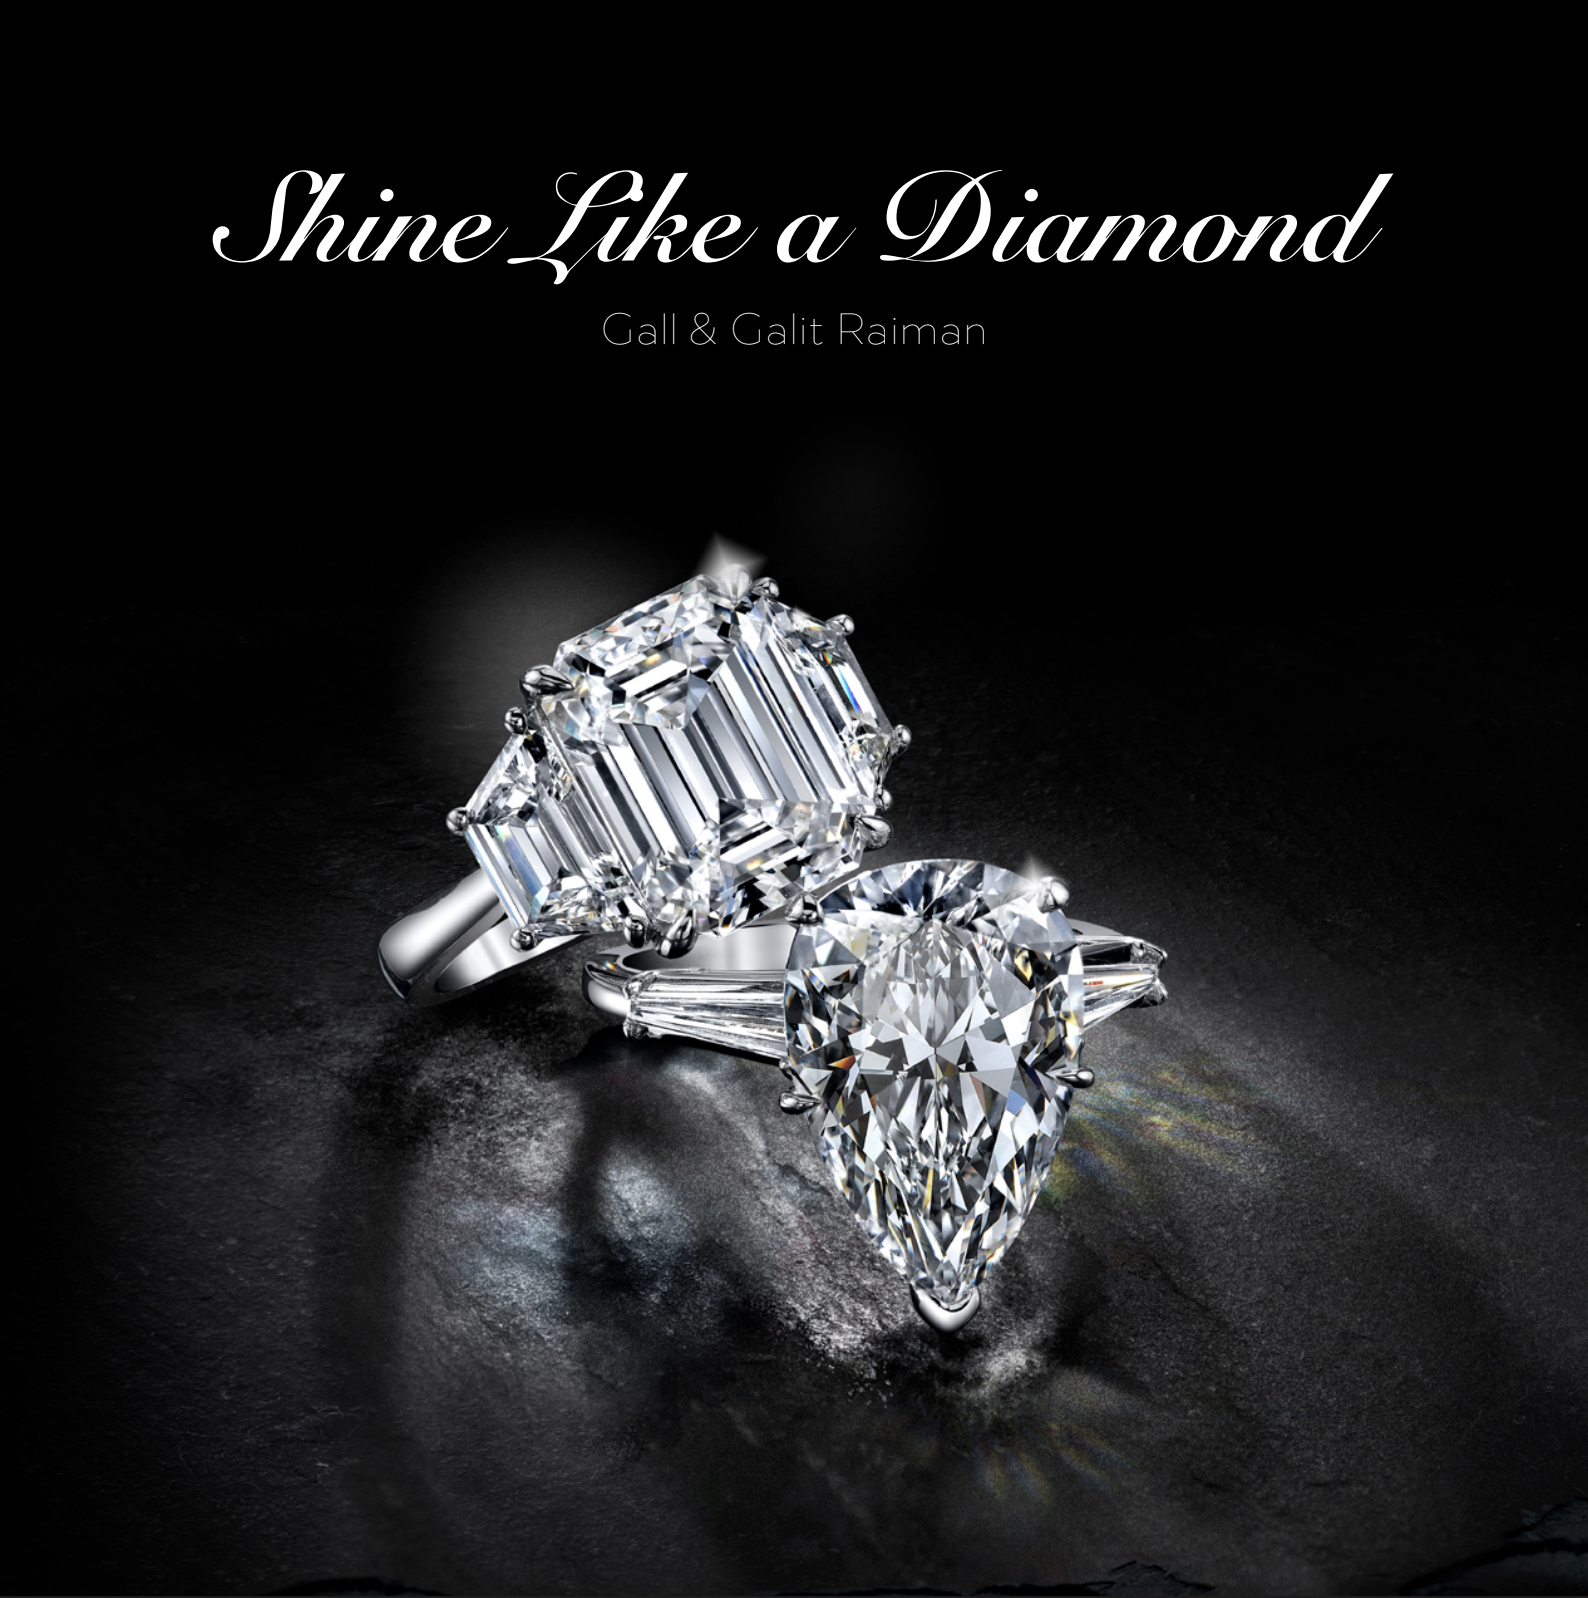 Raiman Rocks "Shine Like a Diamond" Book Publication & Debut